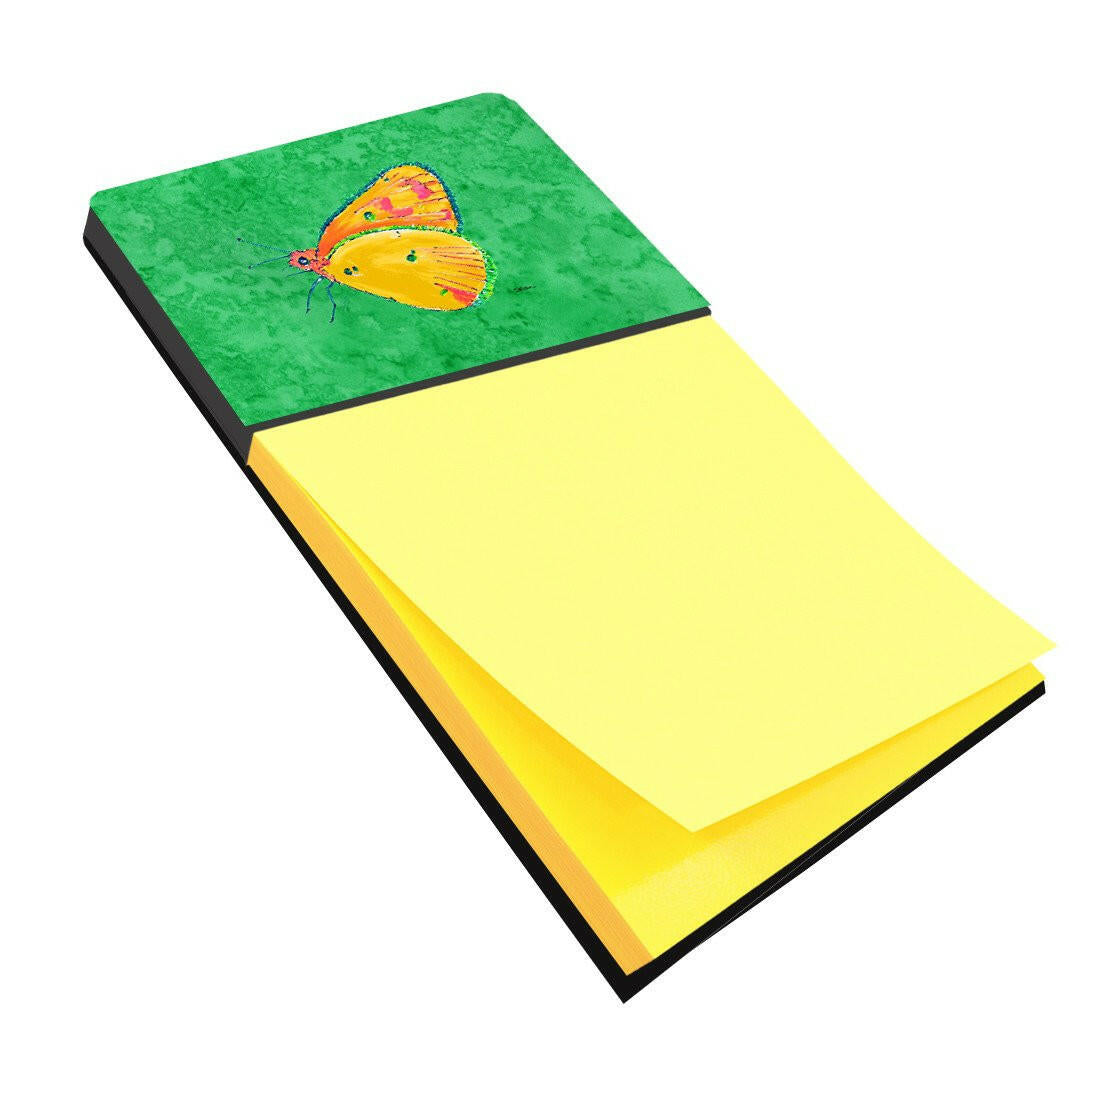 Butterfly Orange on Green Refiillable Sticky Note Holder or Postit Note Dispenser 8861SN by Caroline's Treasures